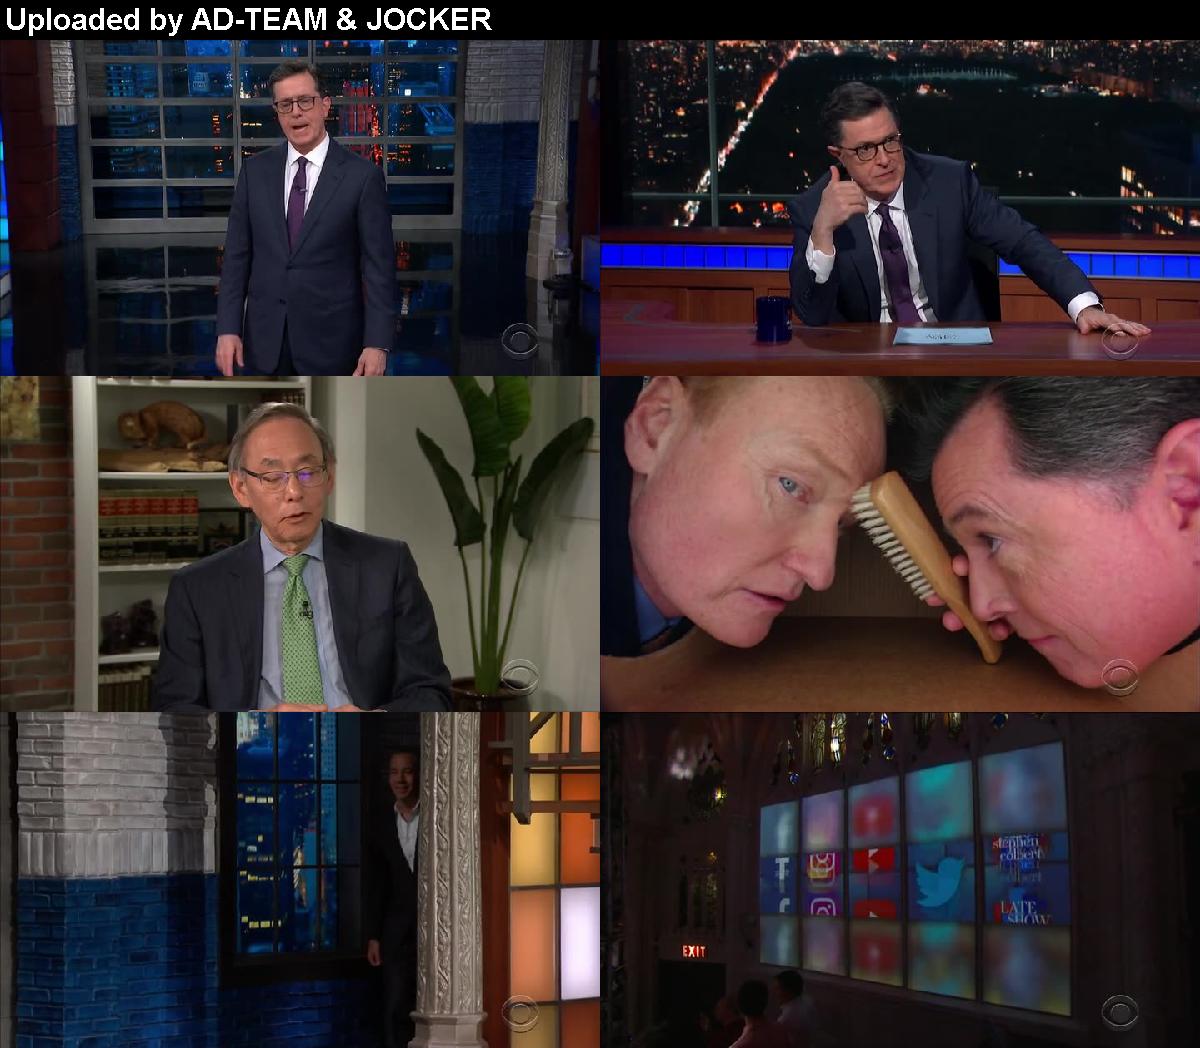 Stephen Colbert 2019 05 23 Conan Obrien Hdtv X264-sorny